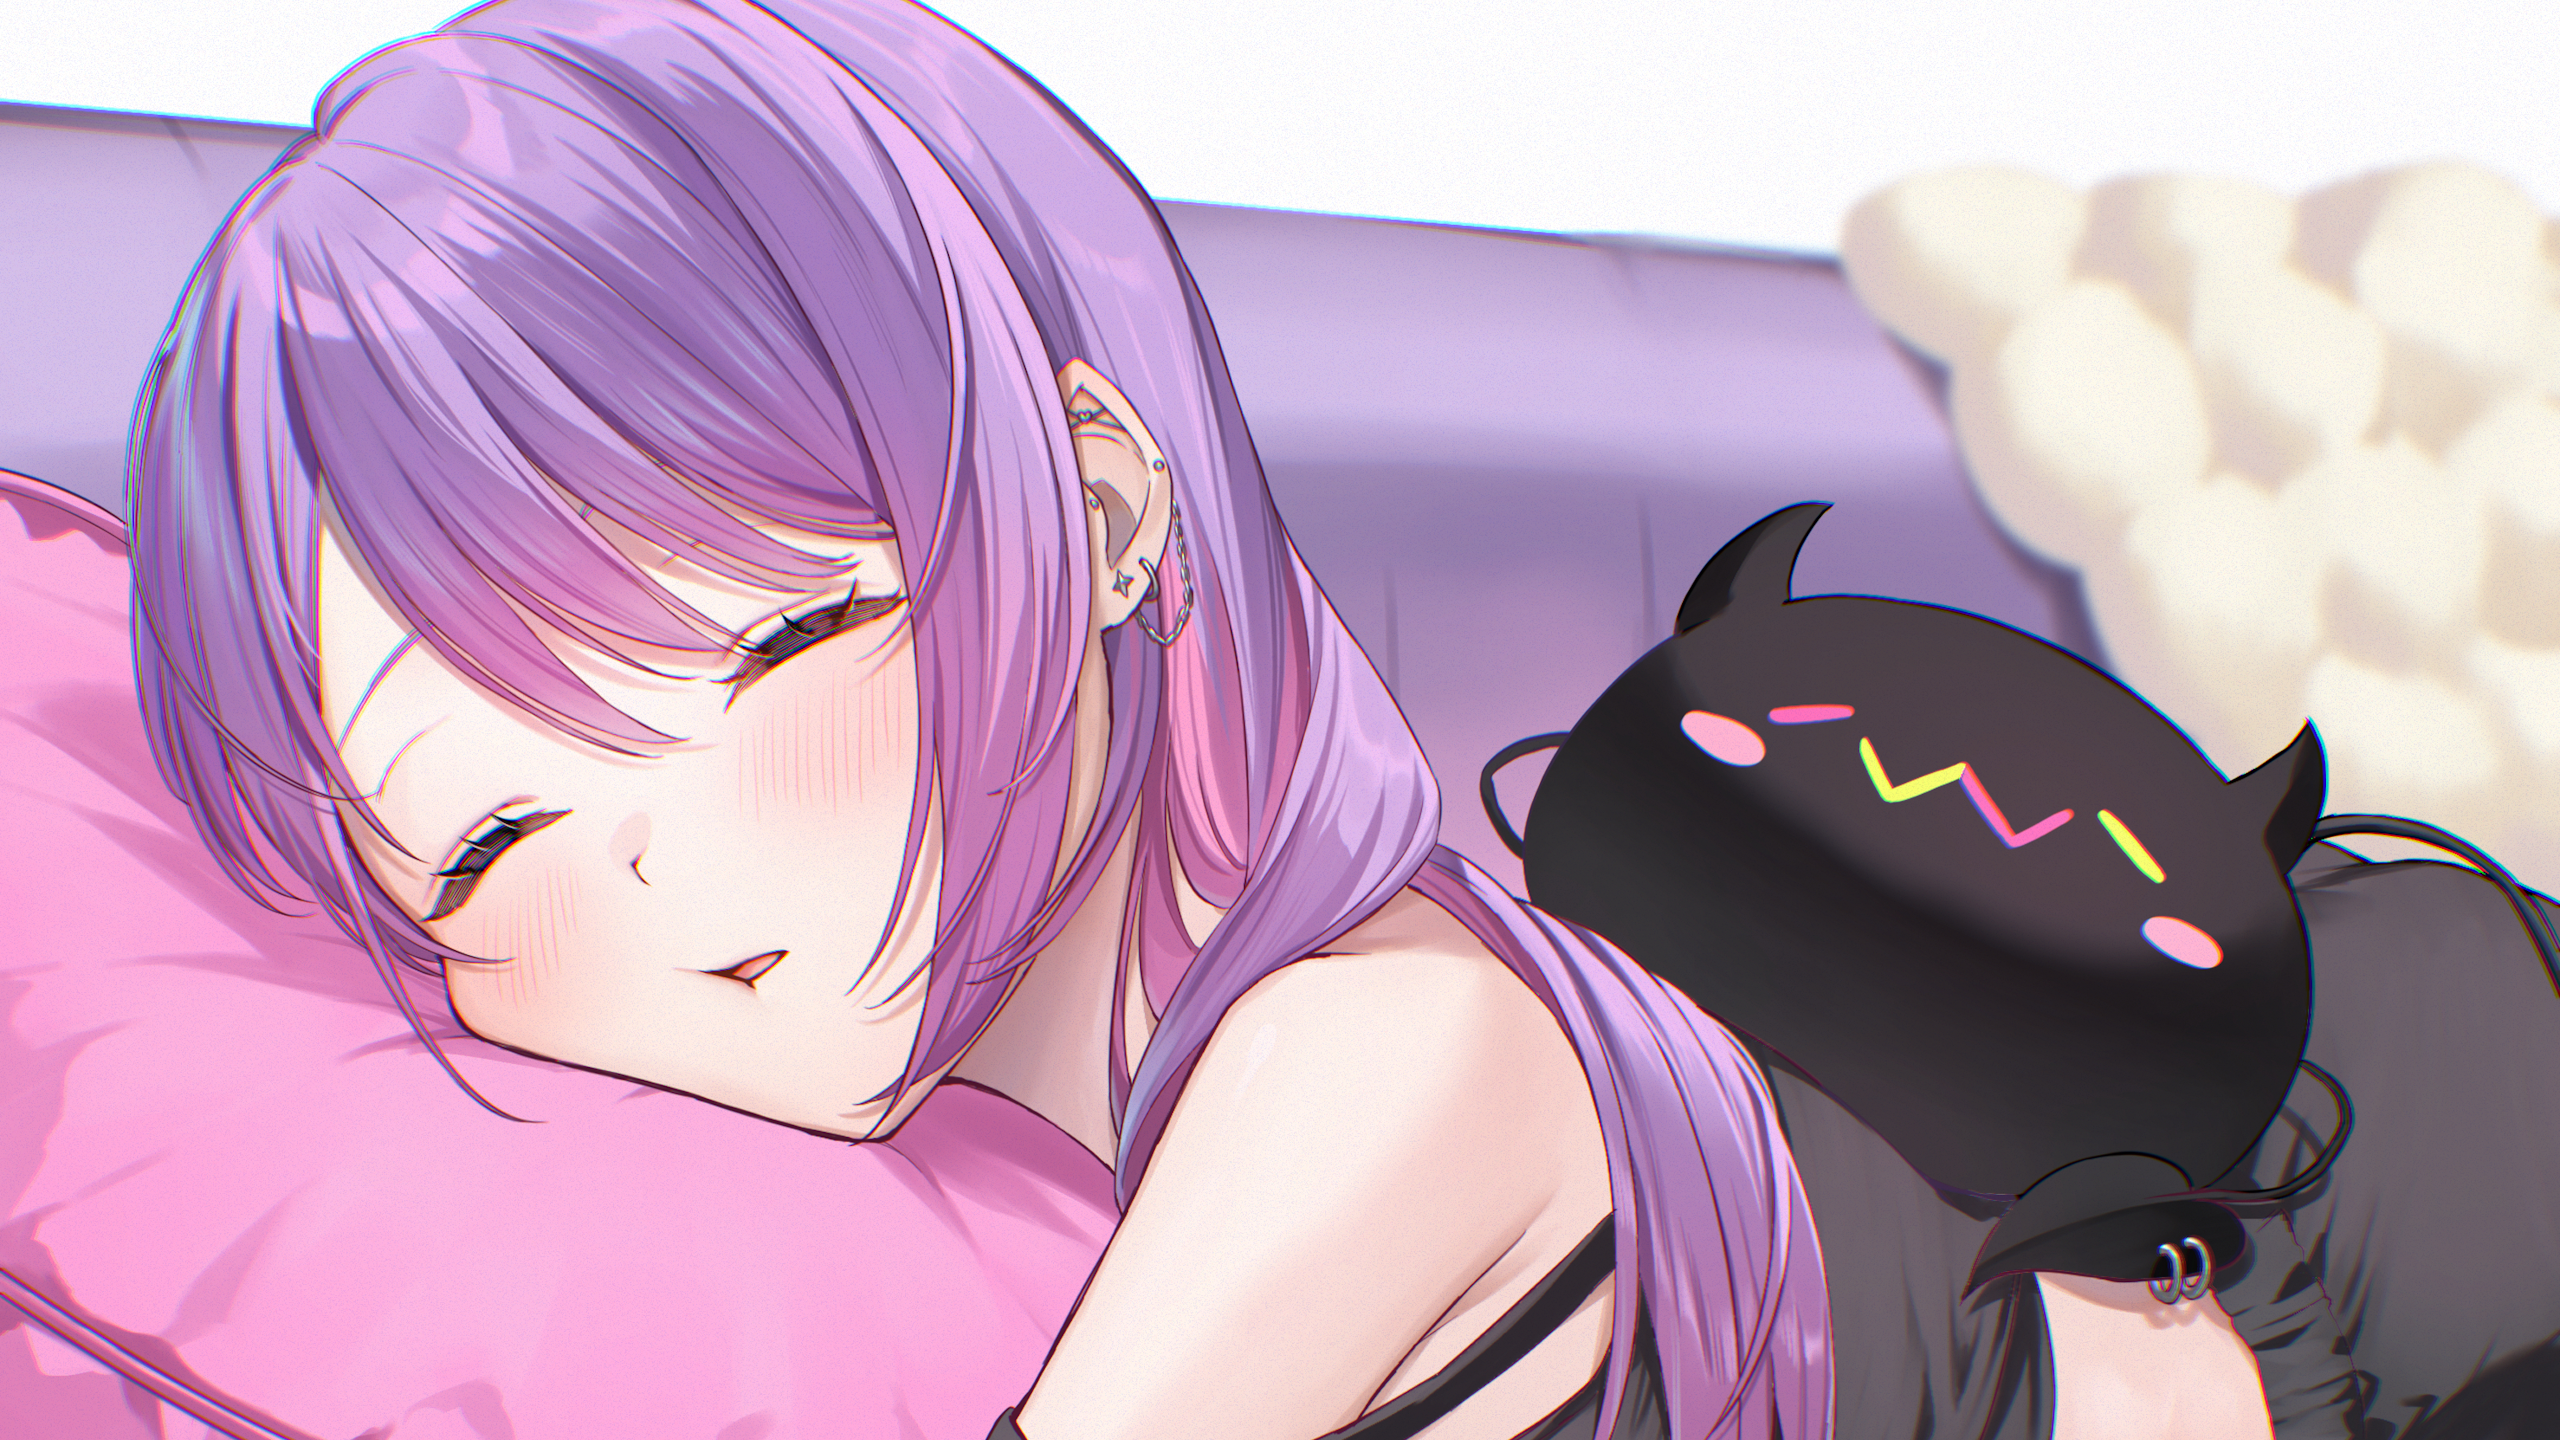 Anime 2560x1440 anime anime girls sleeping purple hair open mouth on sofa toys pillow